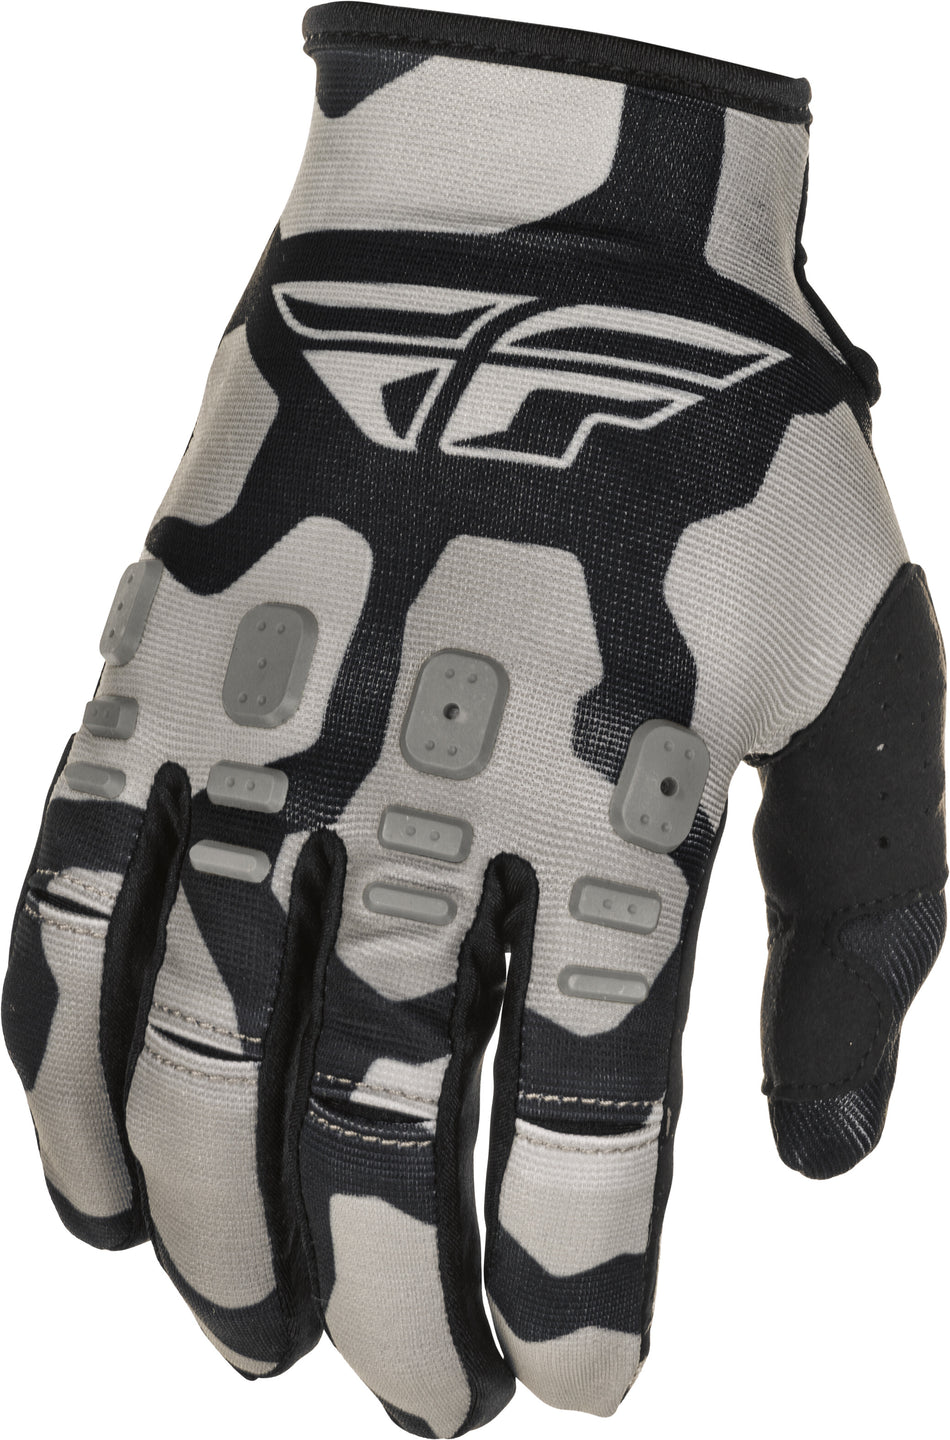 FLY RACING Kinetic K221 Gloves Black/Grey Sz 09 374-51009